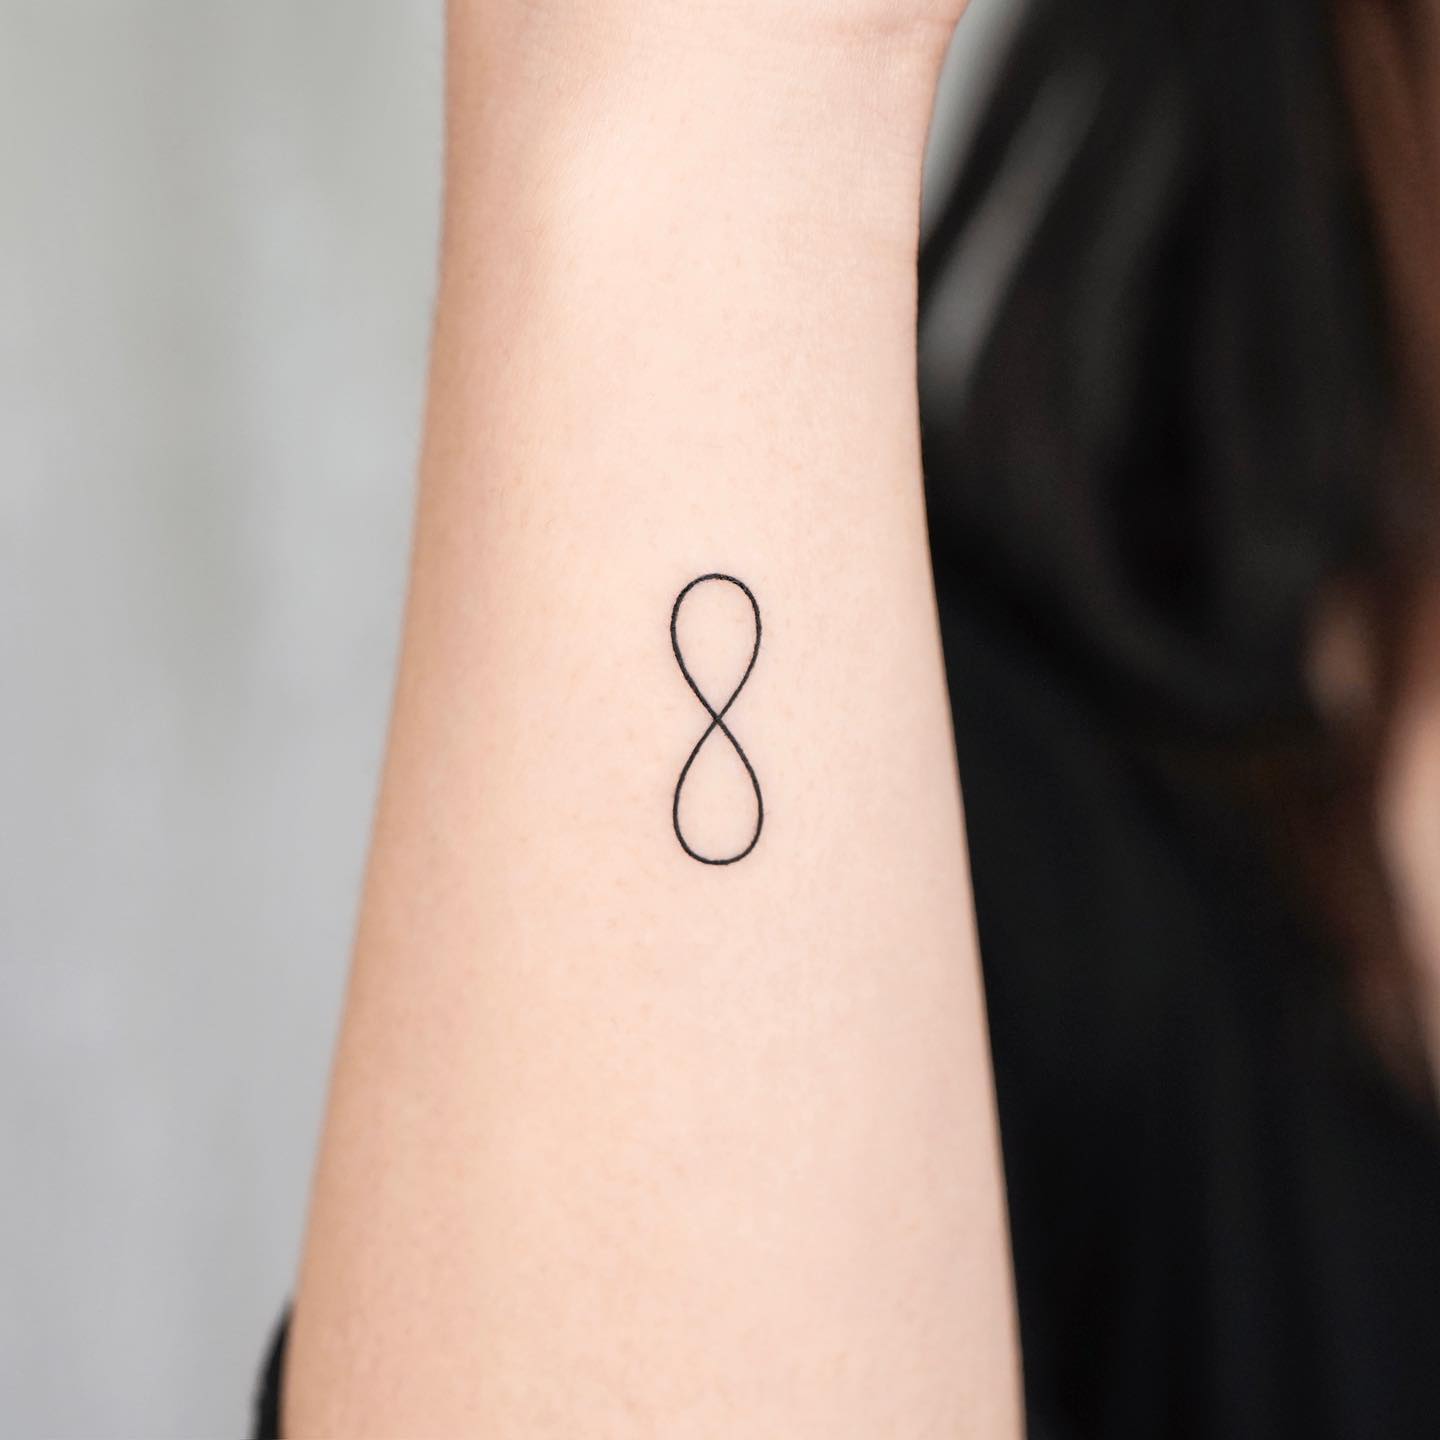 Diseño de tatuaje de infinito pequeño.